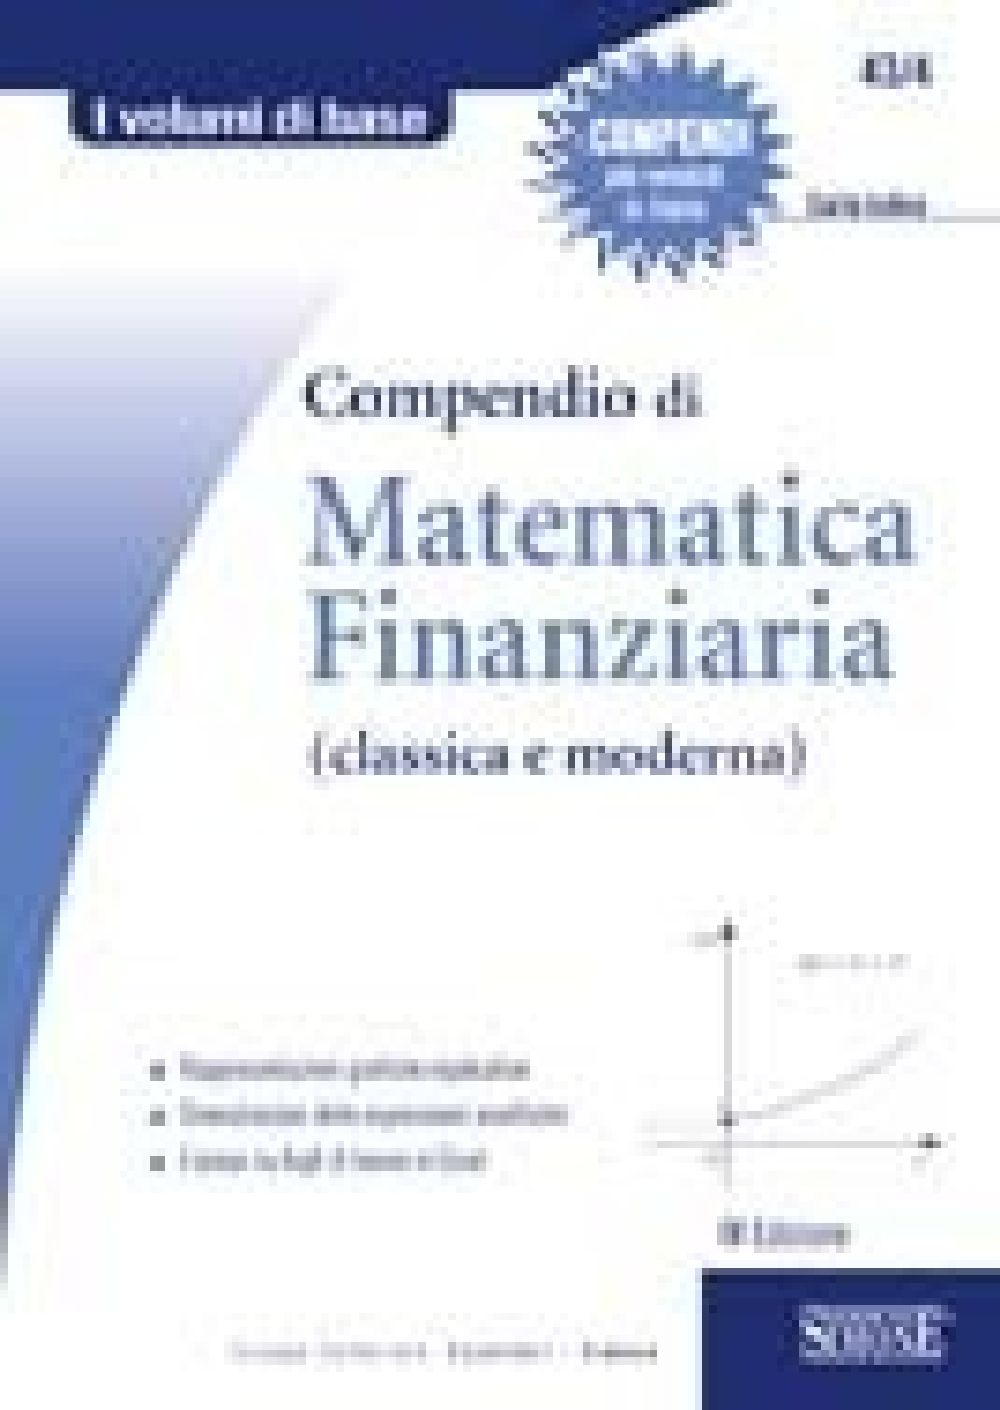 [Ebook] Compendio di Matematica finanziaria (classica e moderna)